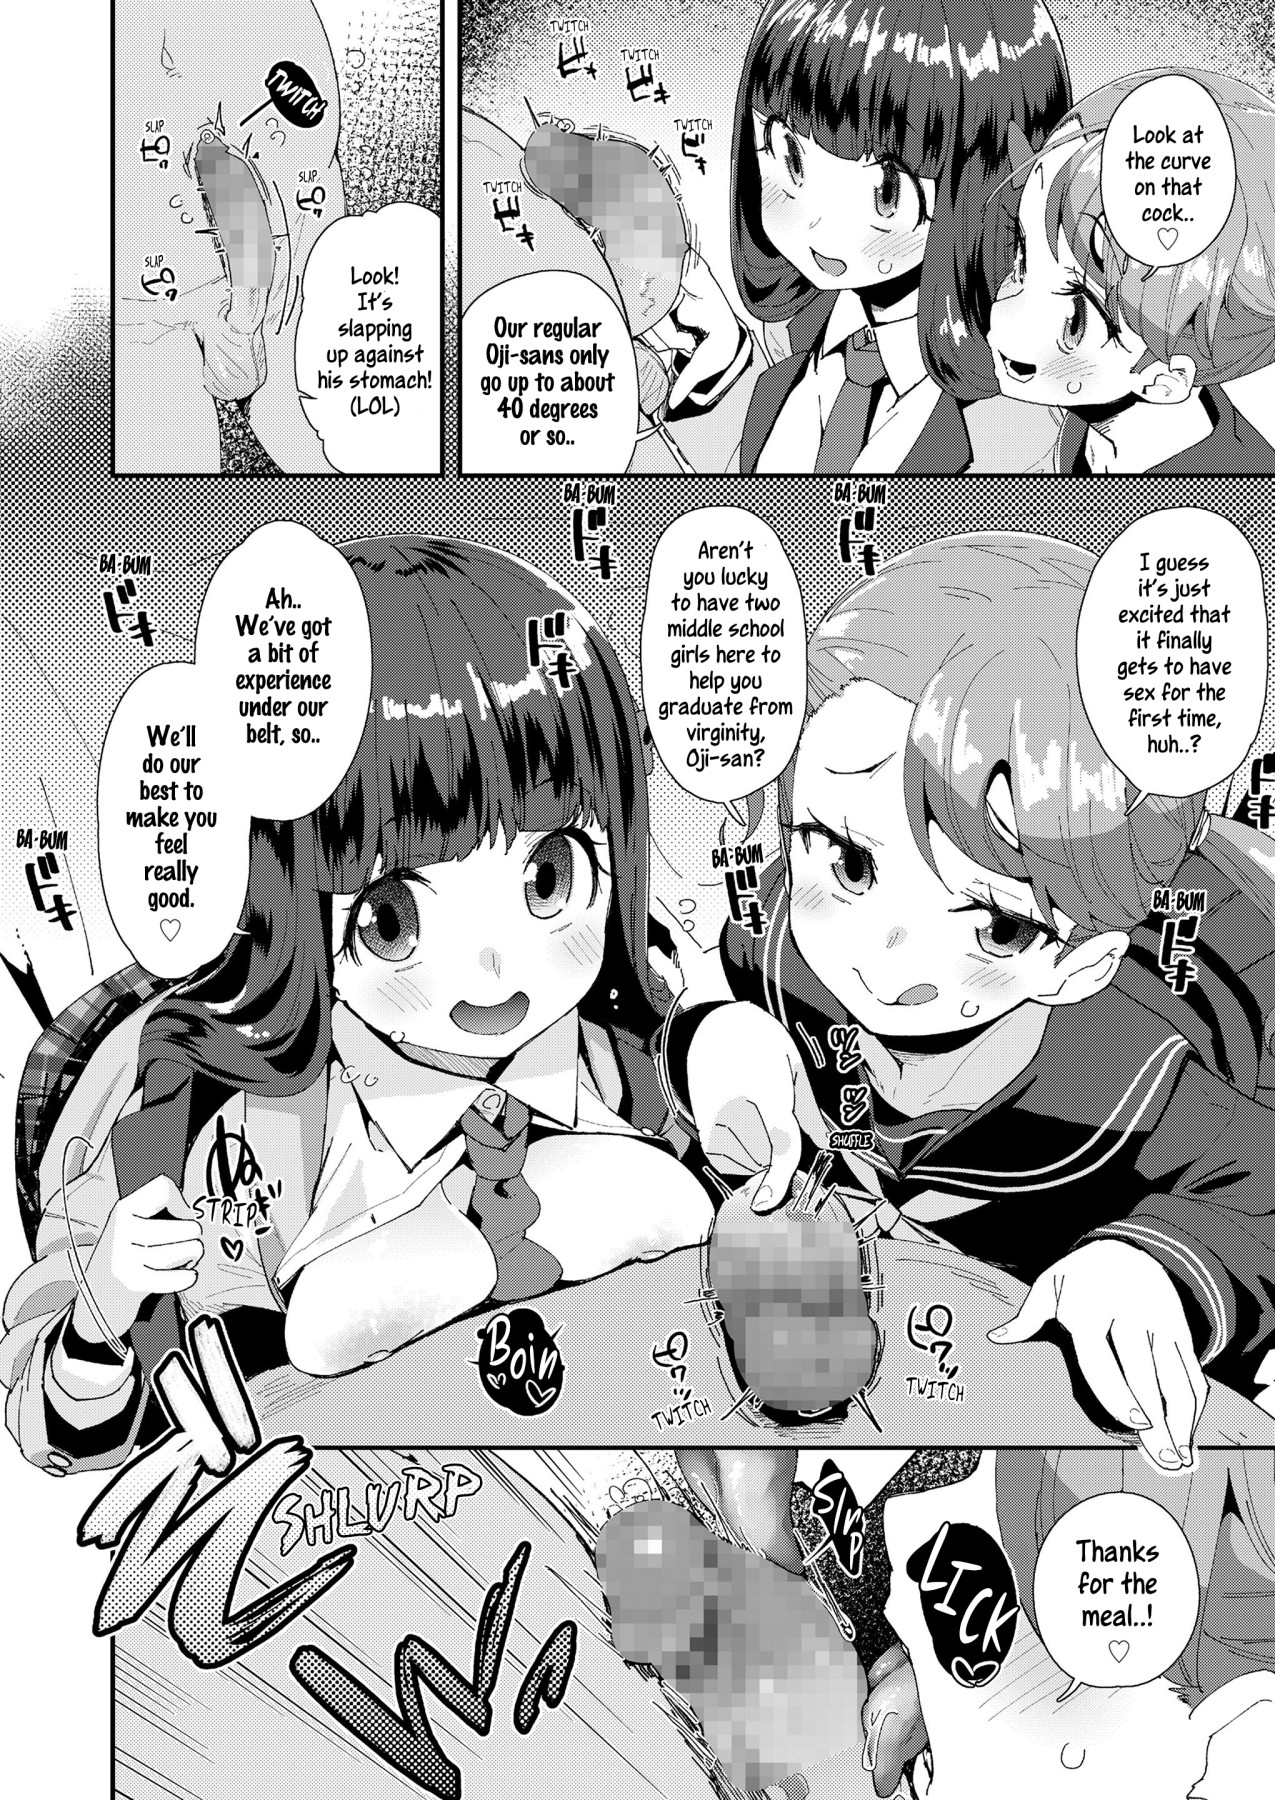 Hentai Manga Comic-Virginity Graduation 2-Read-2